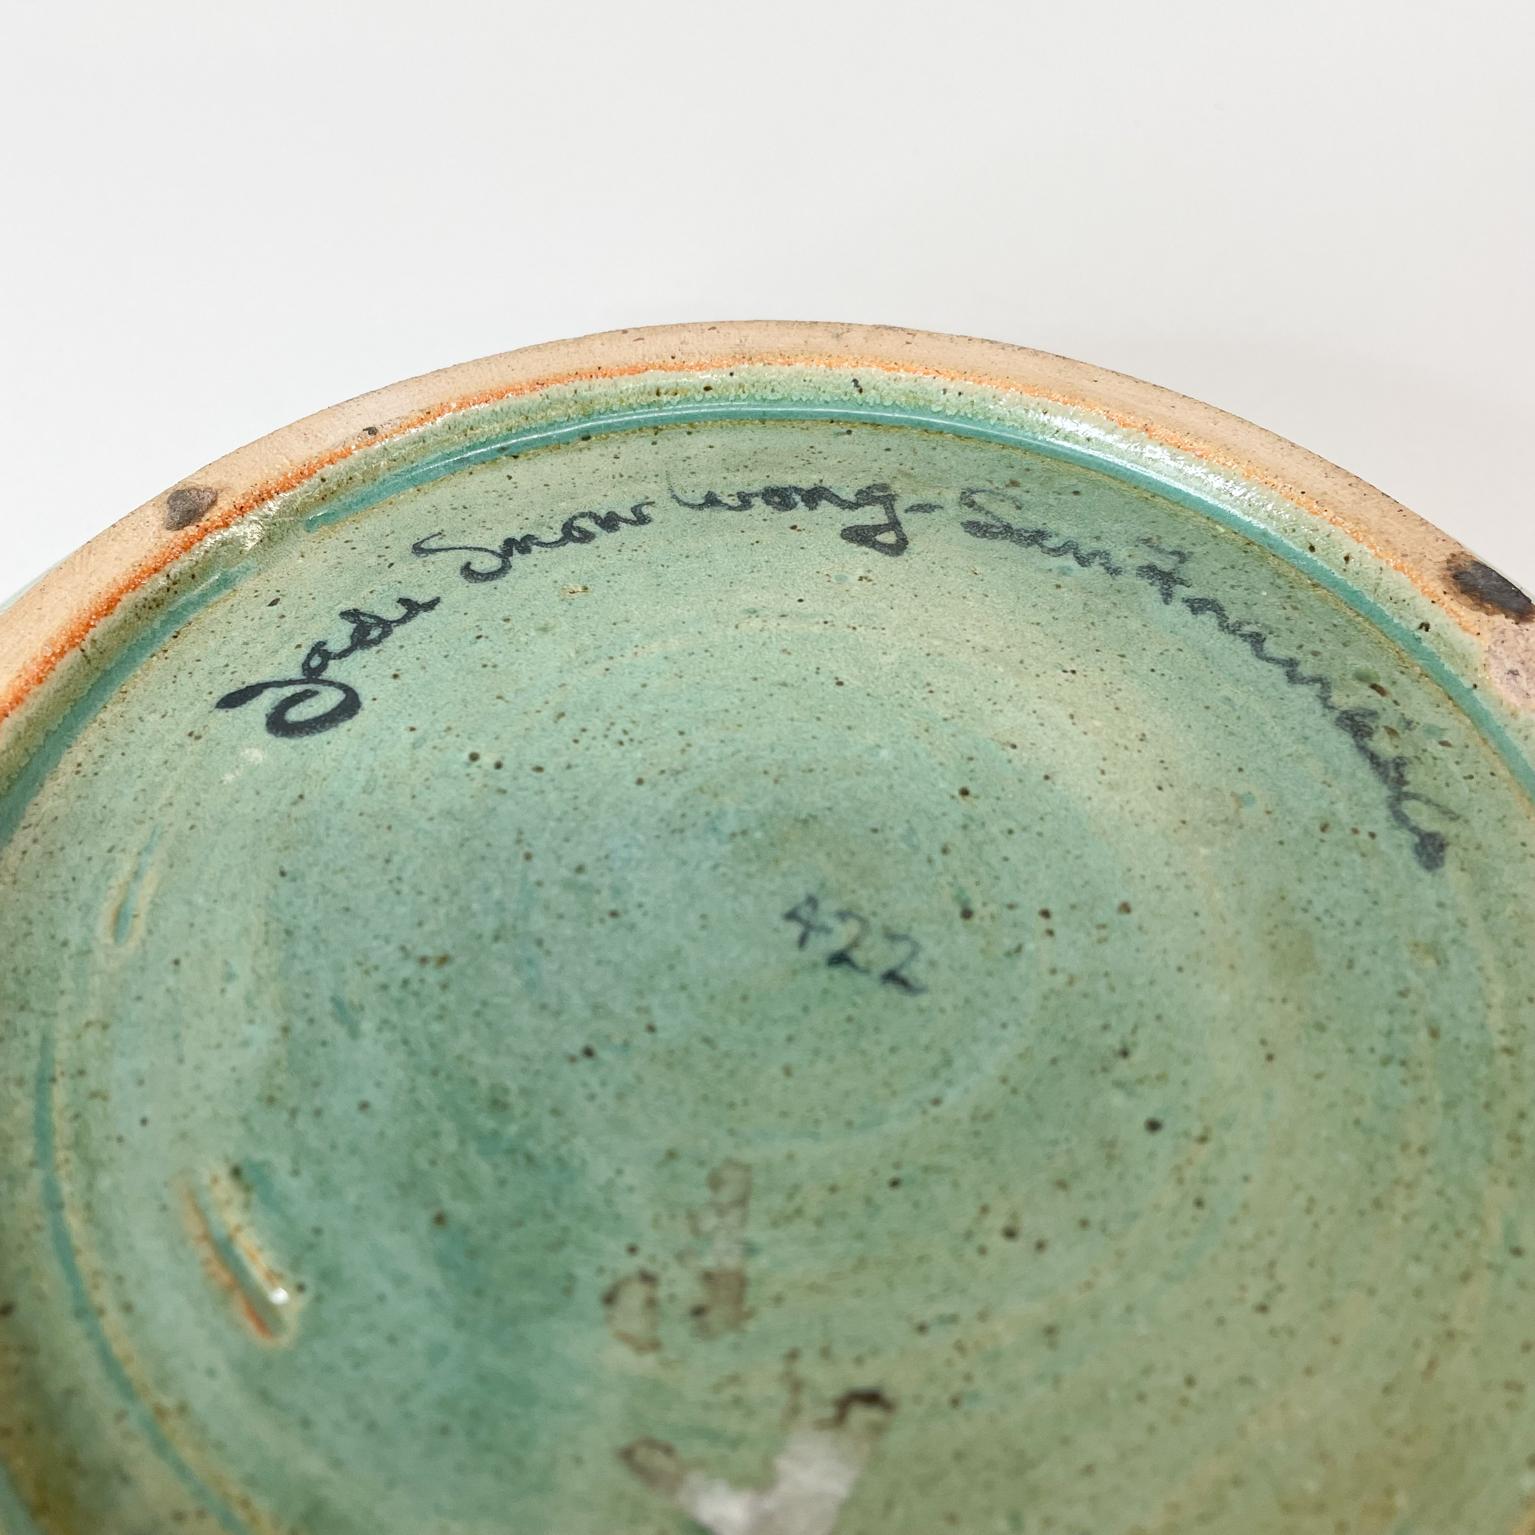 Mid-20th Century Artist Jade Snow Wong Ceramic Glass Pottery Dish Art in Turquoise San Francisco